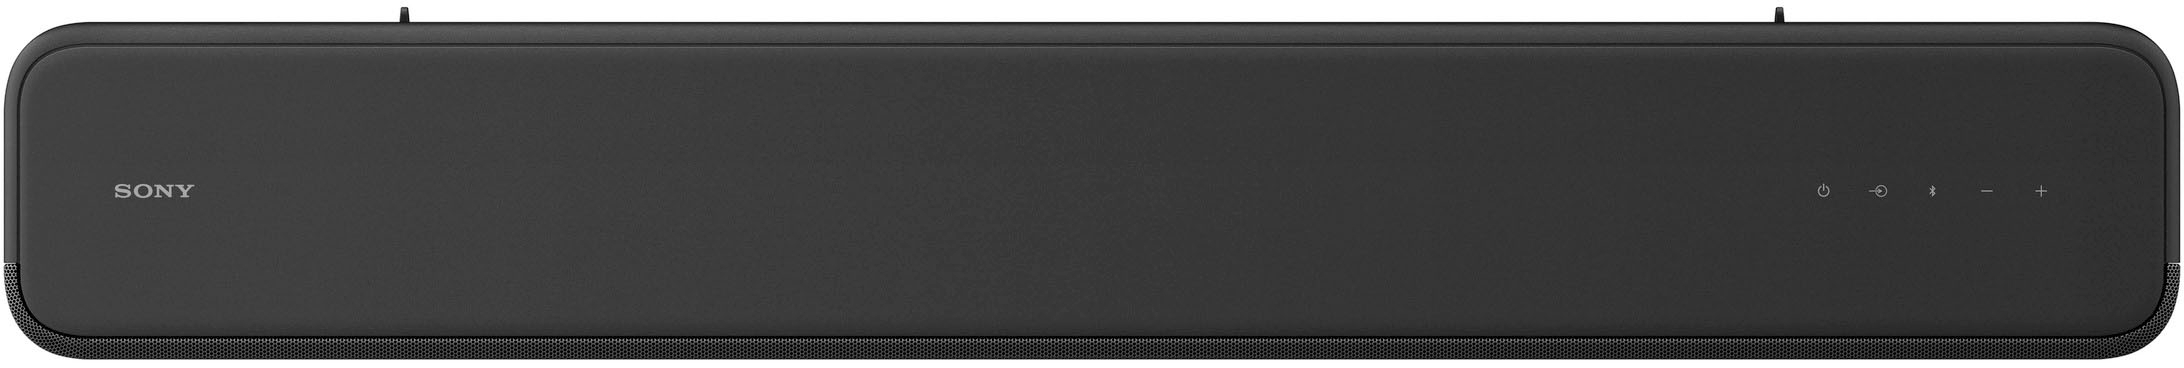 Sony HT-S2000 Compact 3.1ch Dolby HTS2000 Best - Black Soundbar Atmos Buy